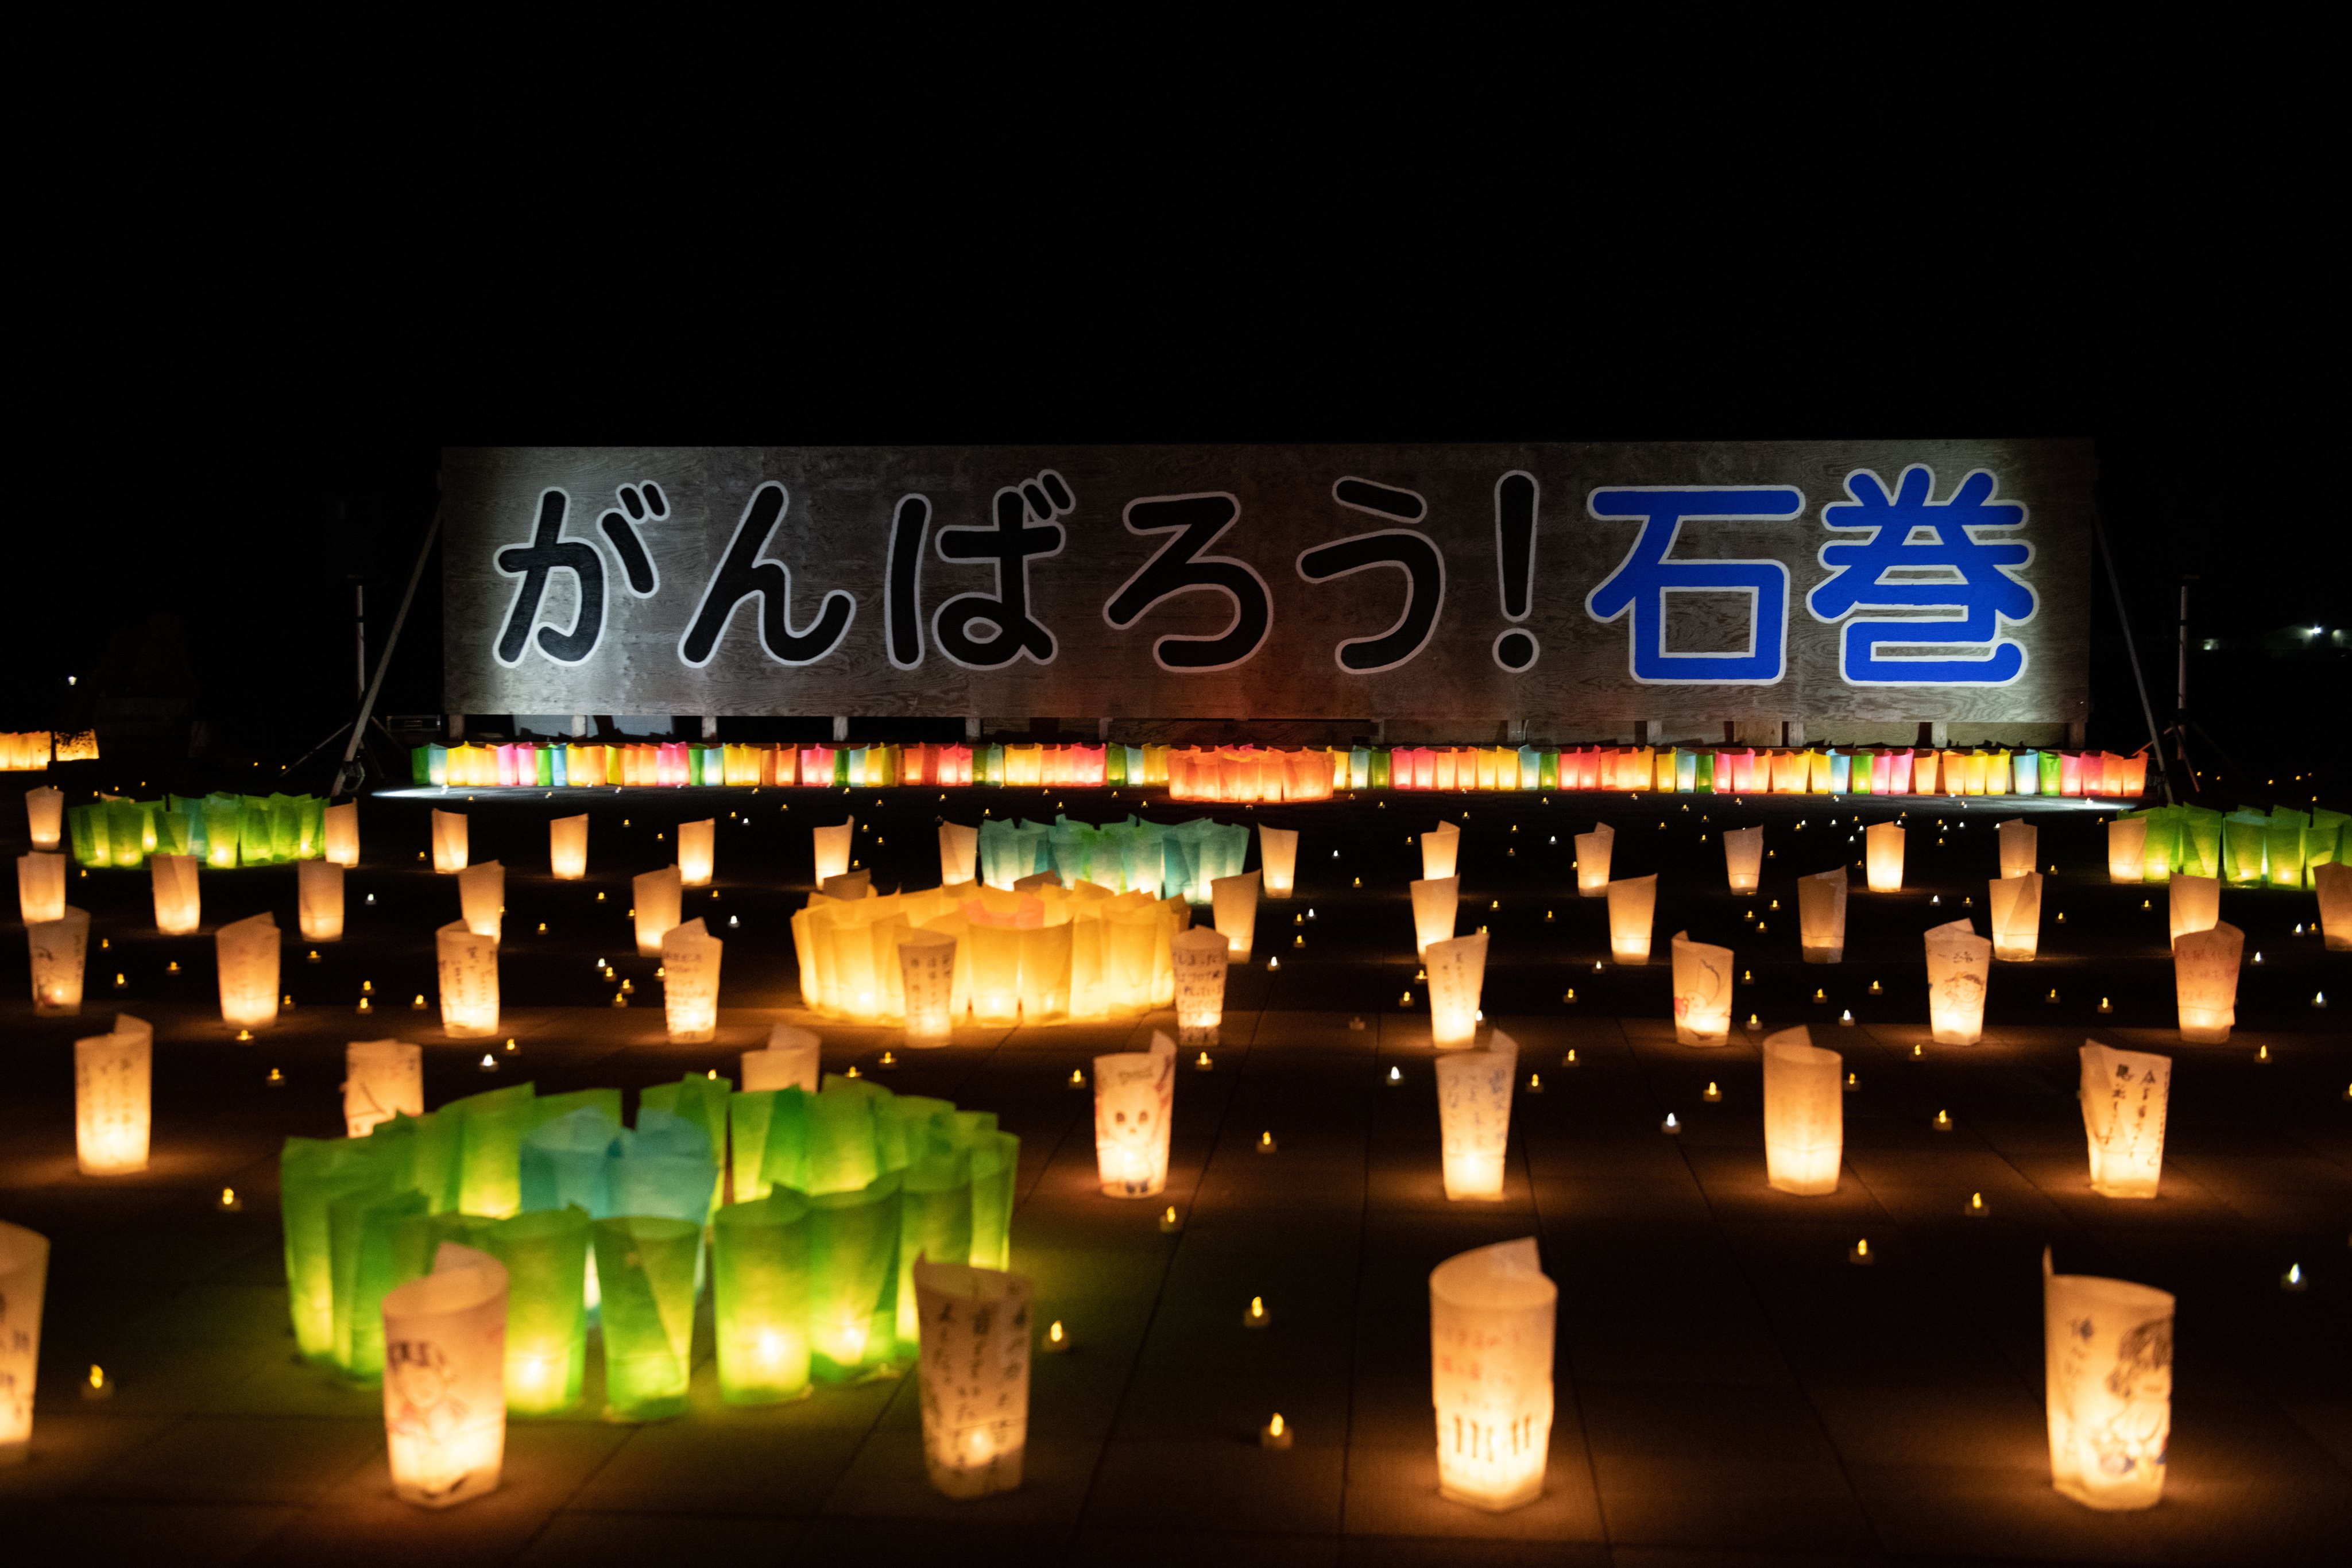 Japan Marks The 10th Anniversary Of The Tohoku Earthquake And Tsunami